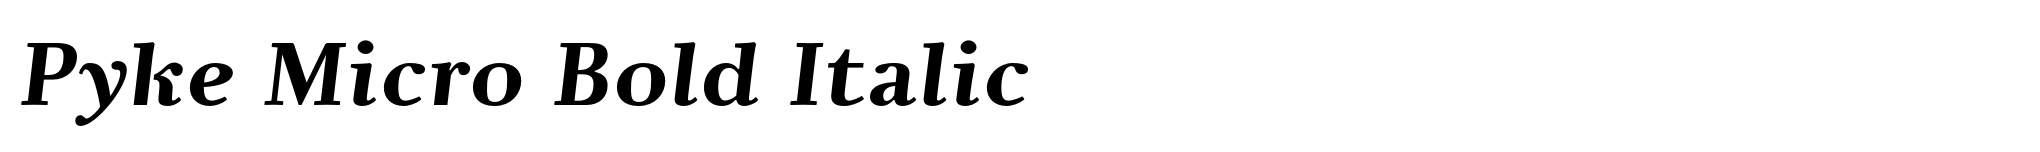 Pyke Micro Bold Italic image